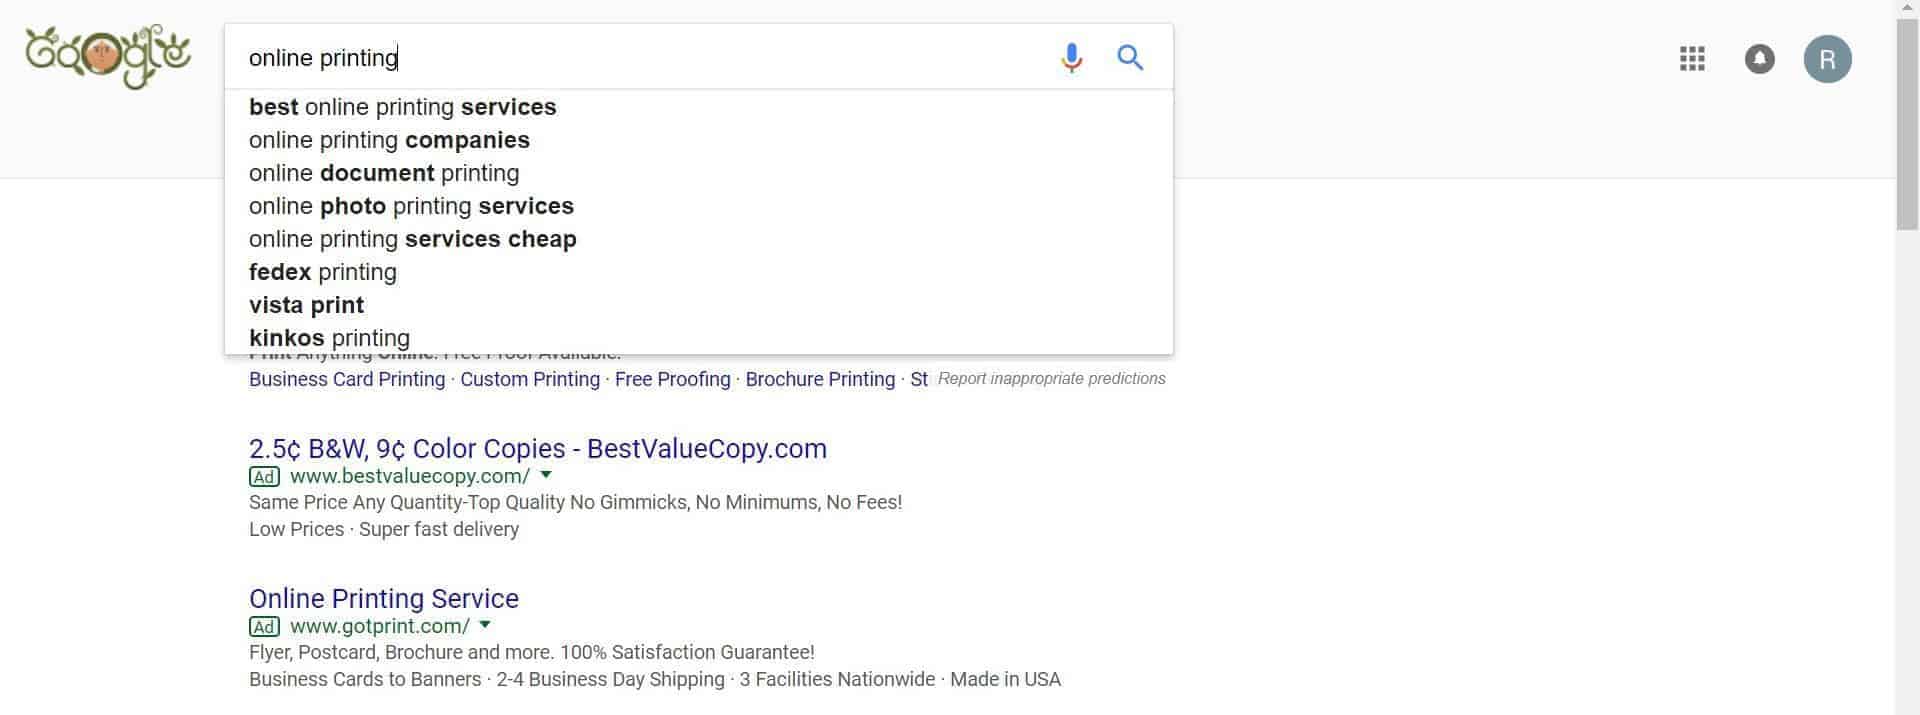 google search autocomplete